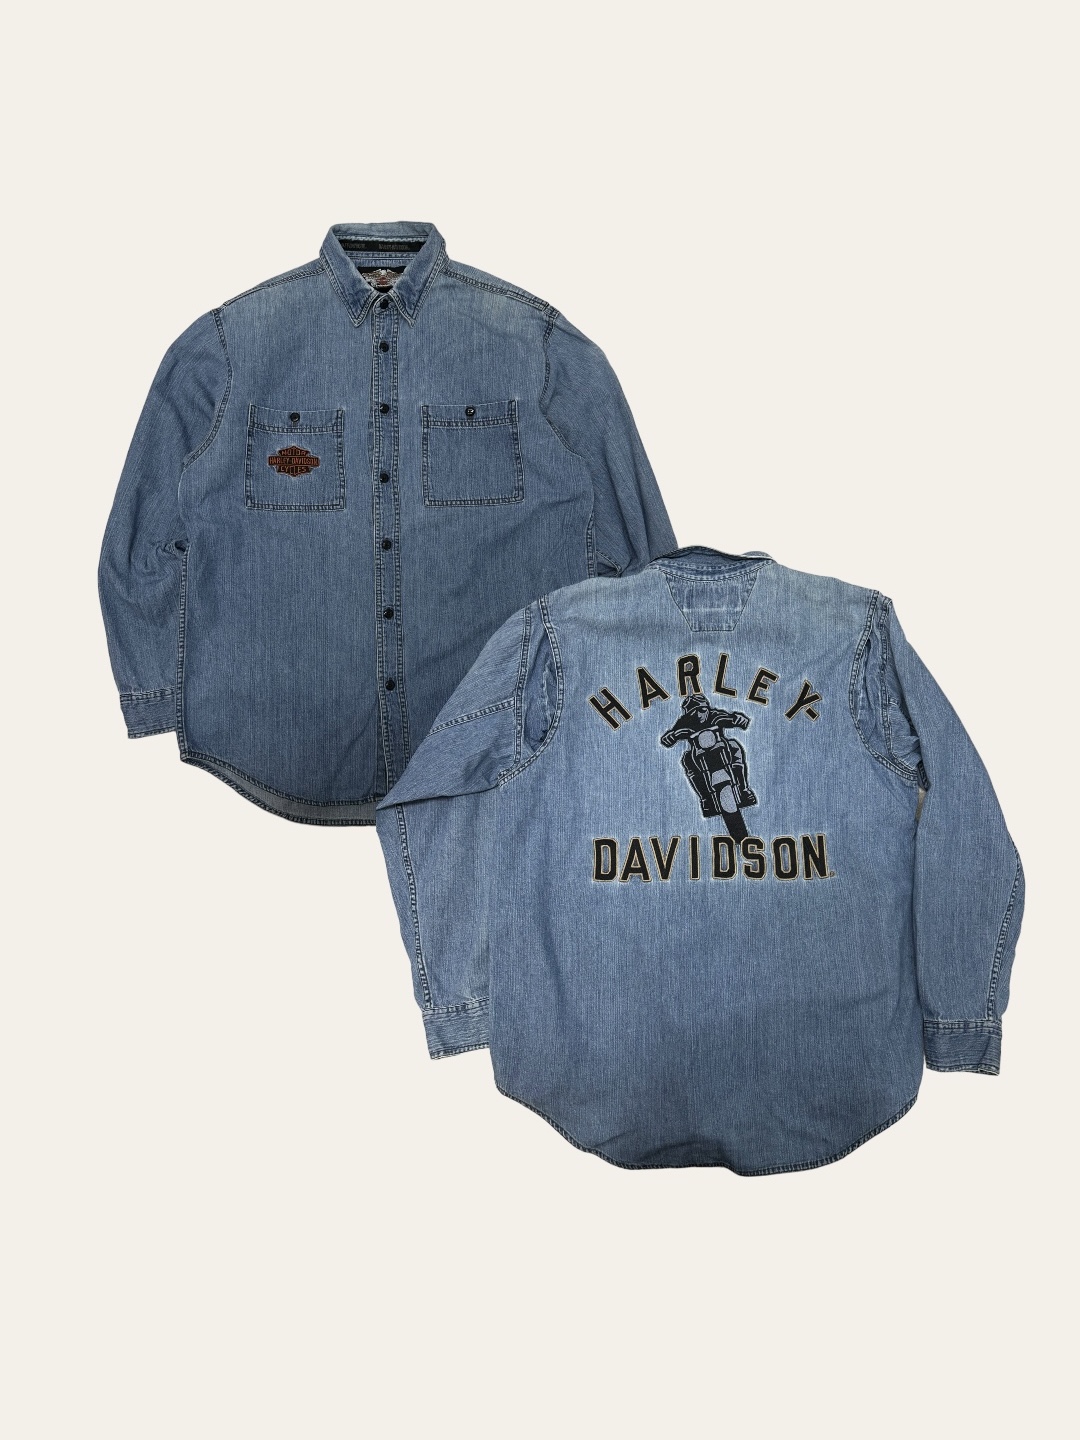 Harley Davidson denim printing embroidered short sleeve work shirt  M